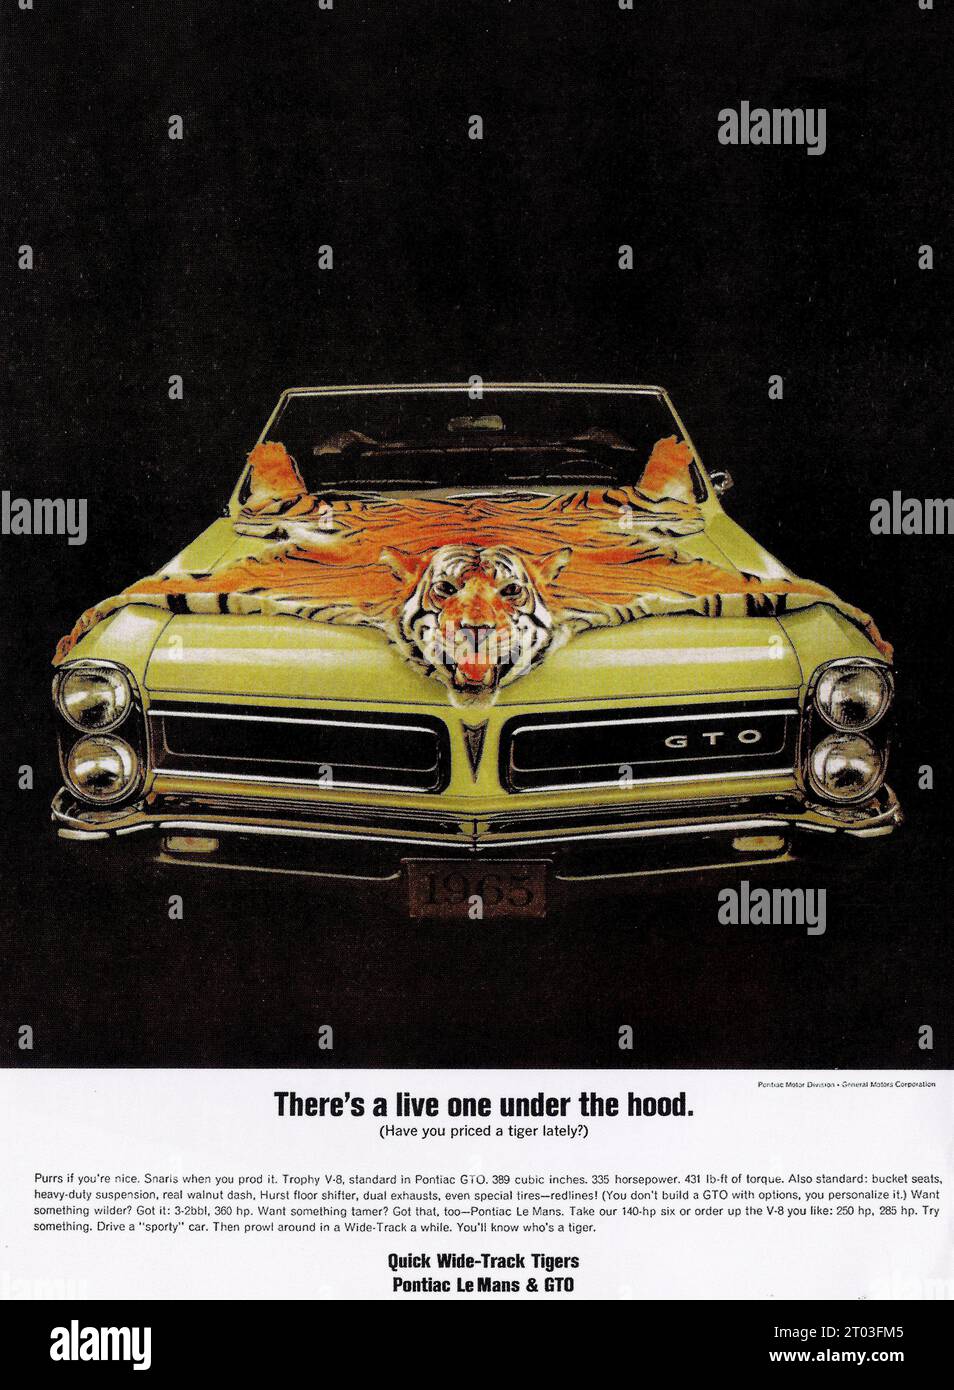 '65 Pontiac GTO Tiger 'Live One Under The Hood' 389 V-8 Engine 360 HP, 1965 Stock Photo